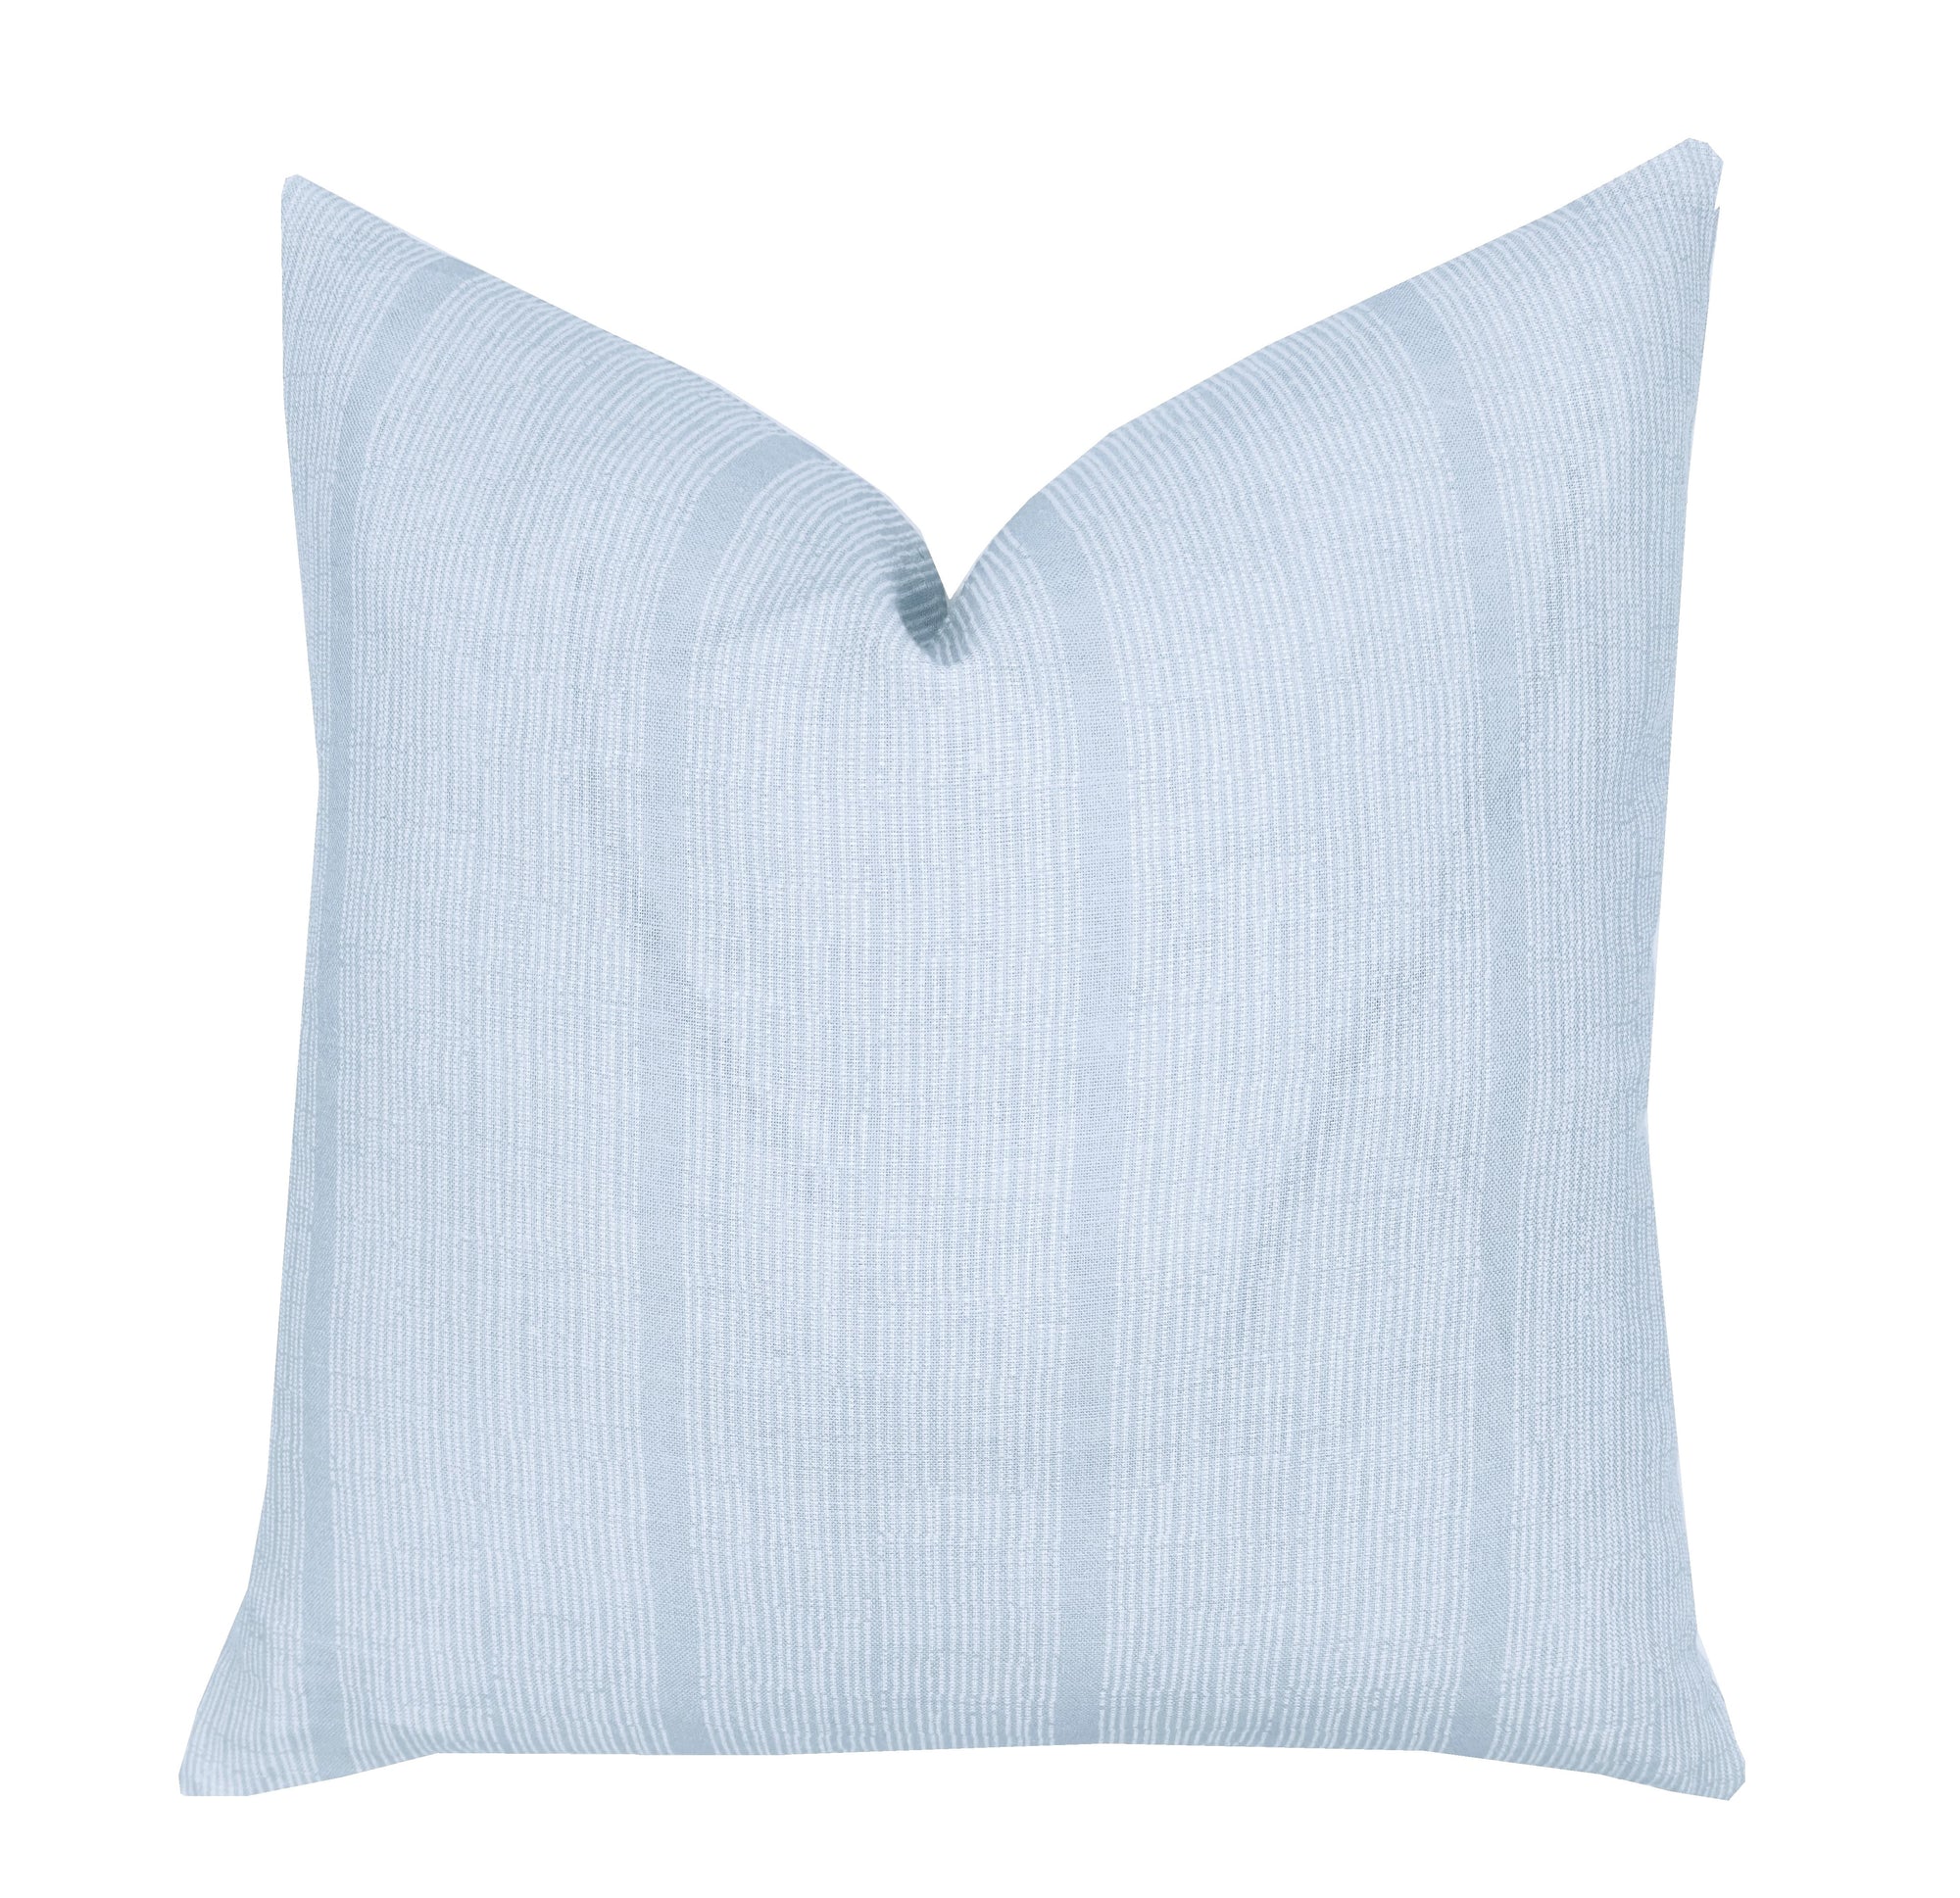 Coastal Blue Stripe Pillow Cover | Ivory Stripe pattern on Blue Linen